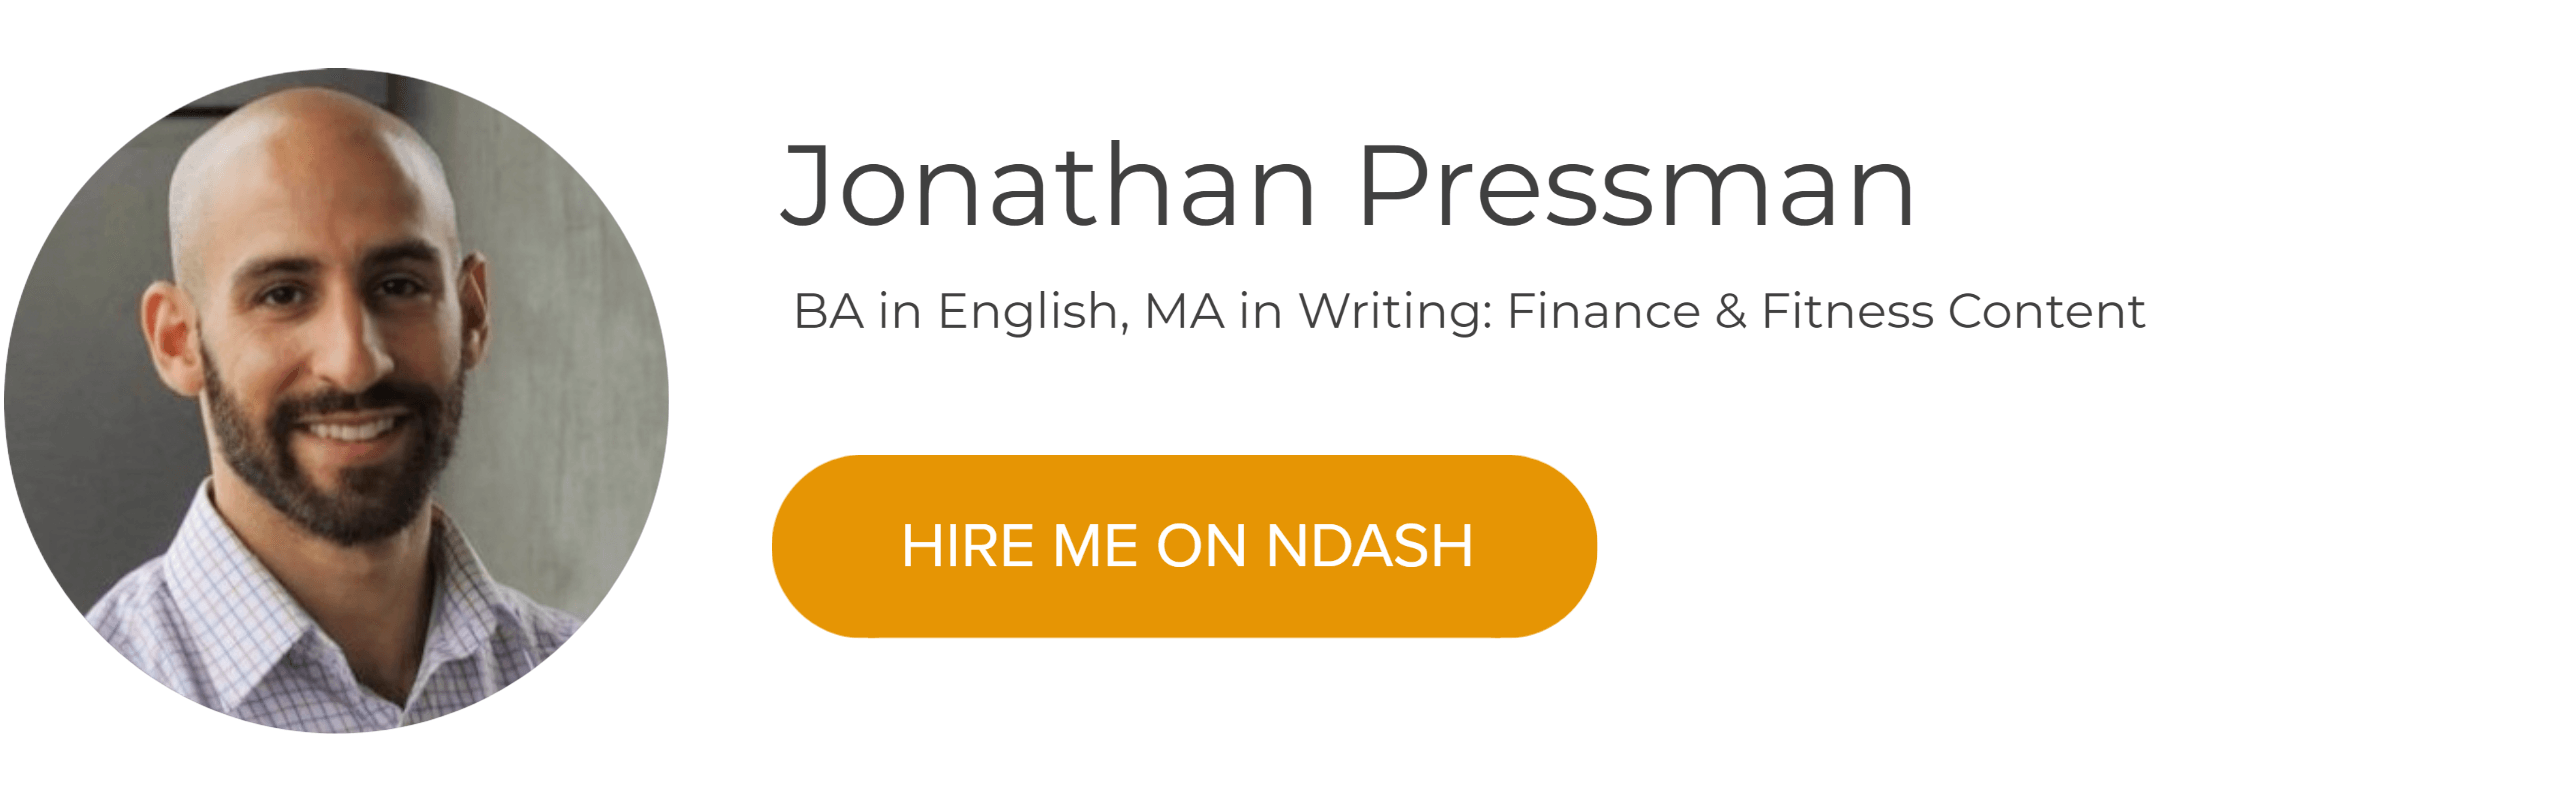 Jonathan Pressman: Finance & Fitness Content Writer